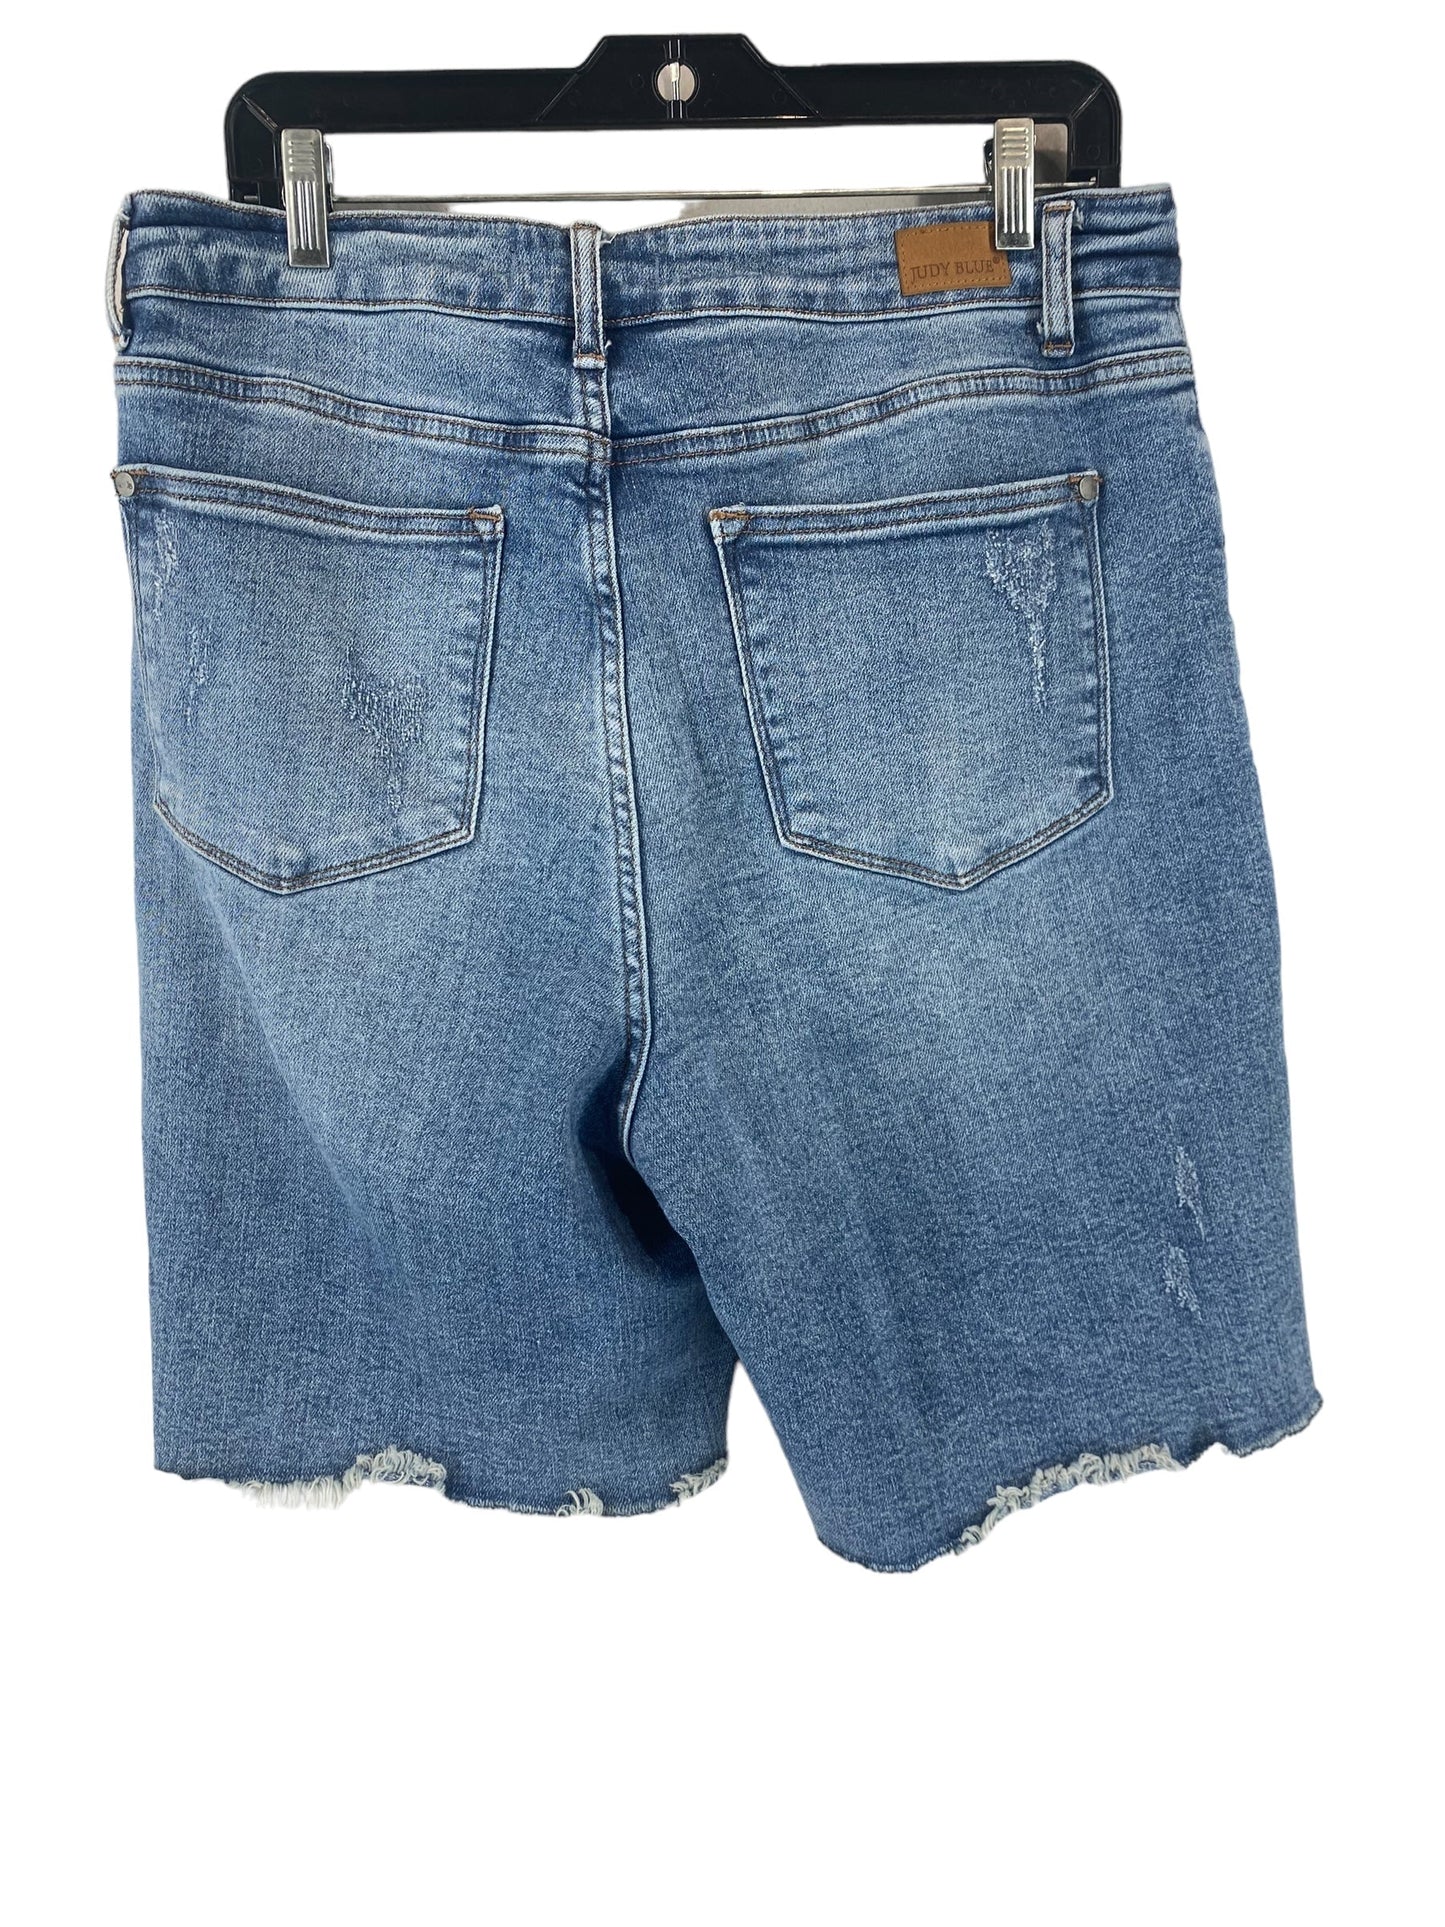 Blue Denim Shorts Judy Blue, Size 1x